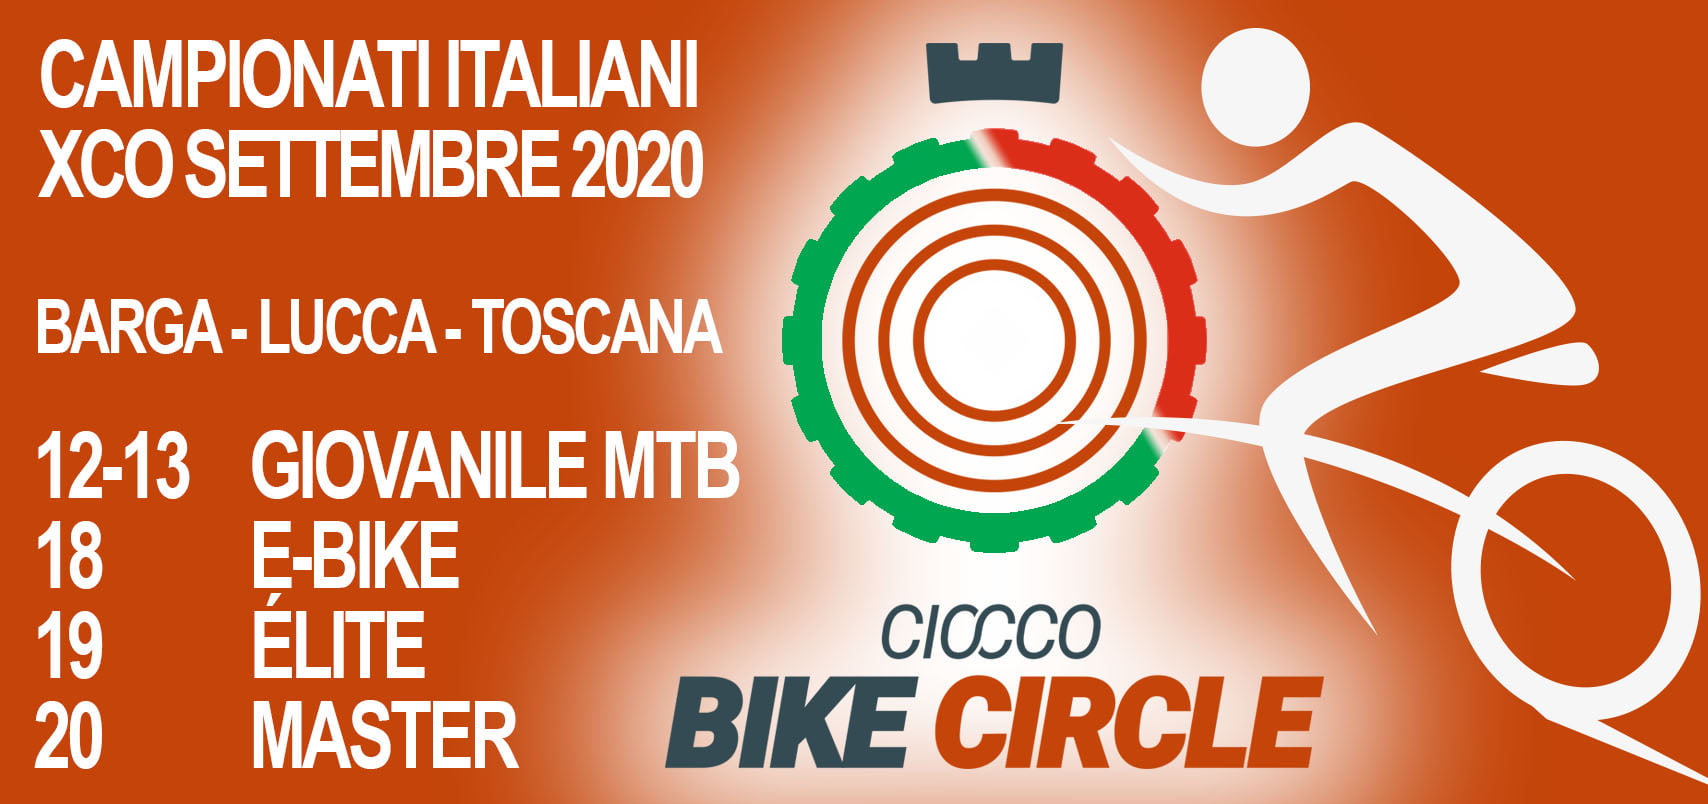 Campionati Italiani Xc 2020